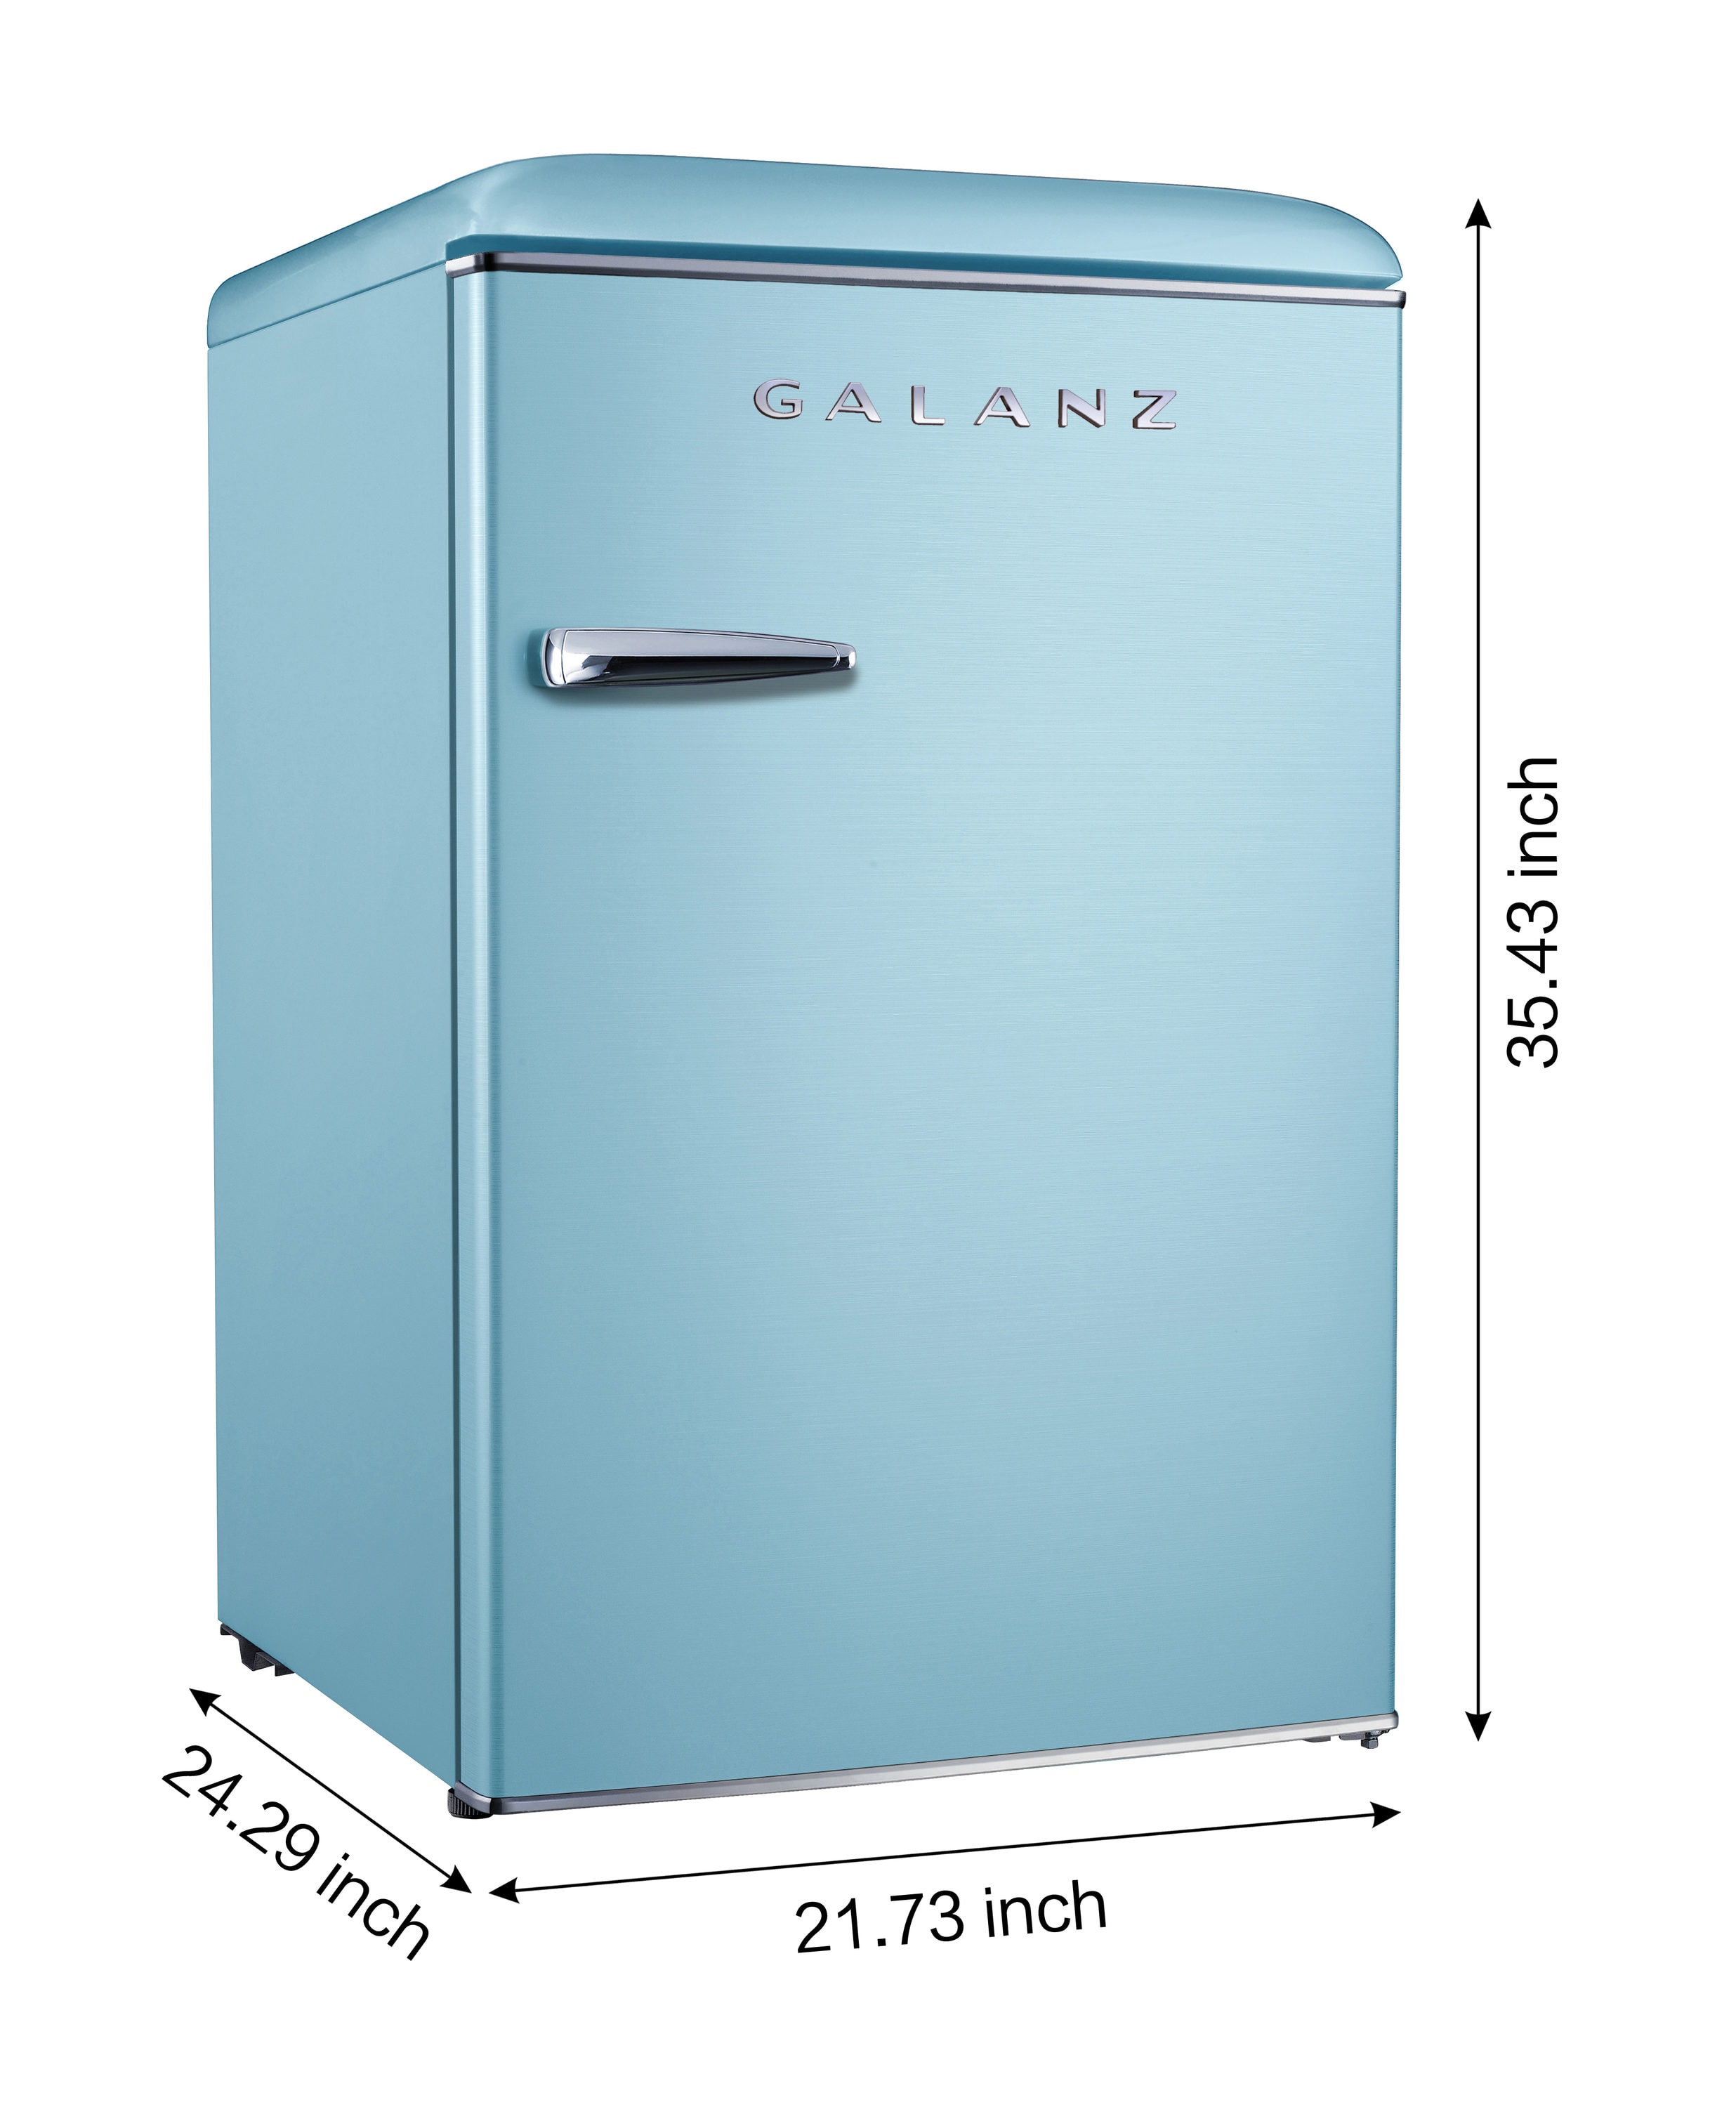 Freezerless Mini Fridges in Mini Fridges & Compact Refrigerators